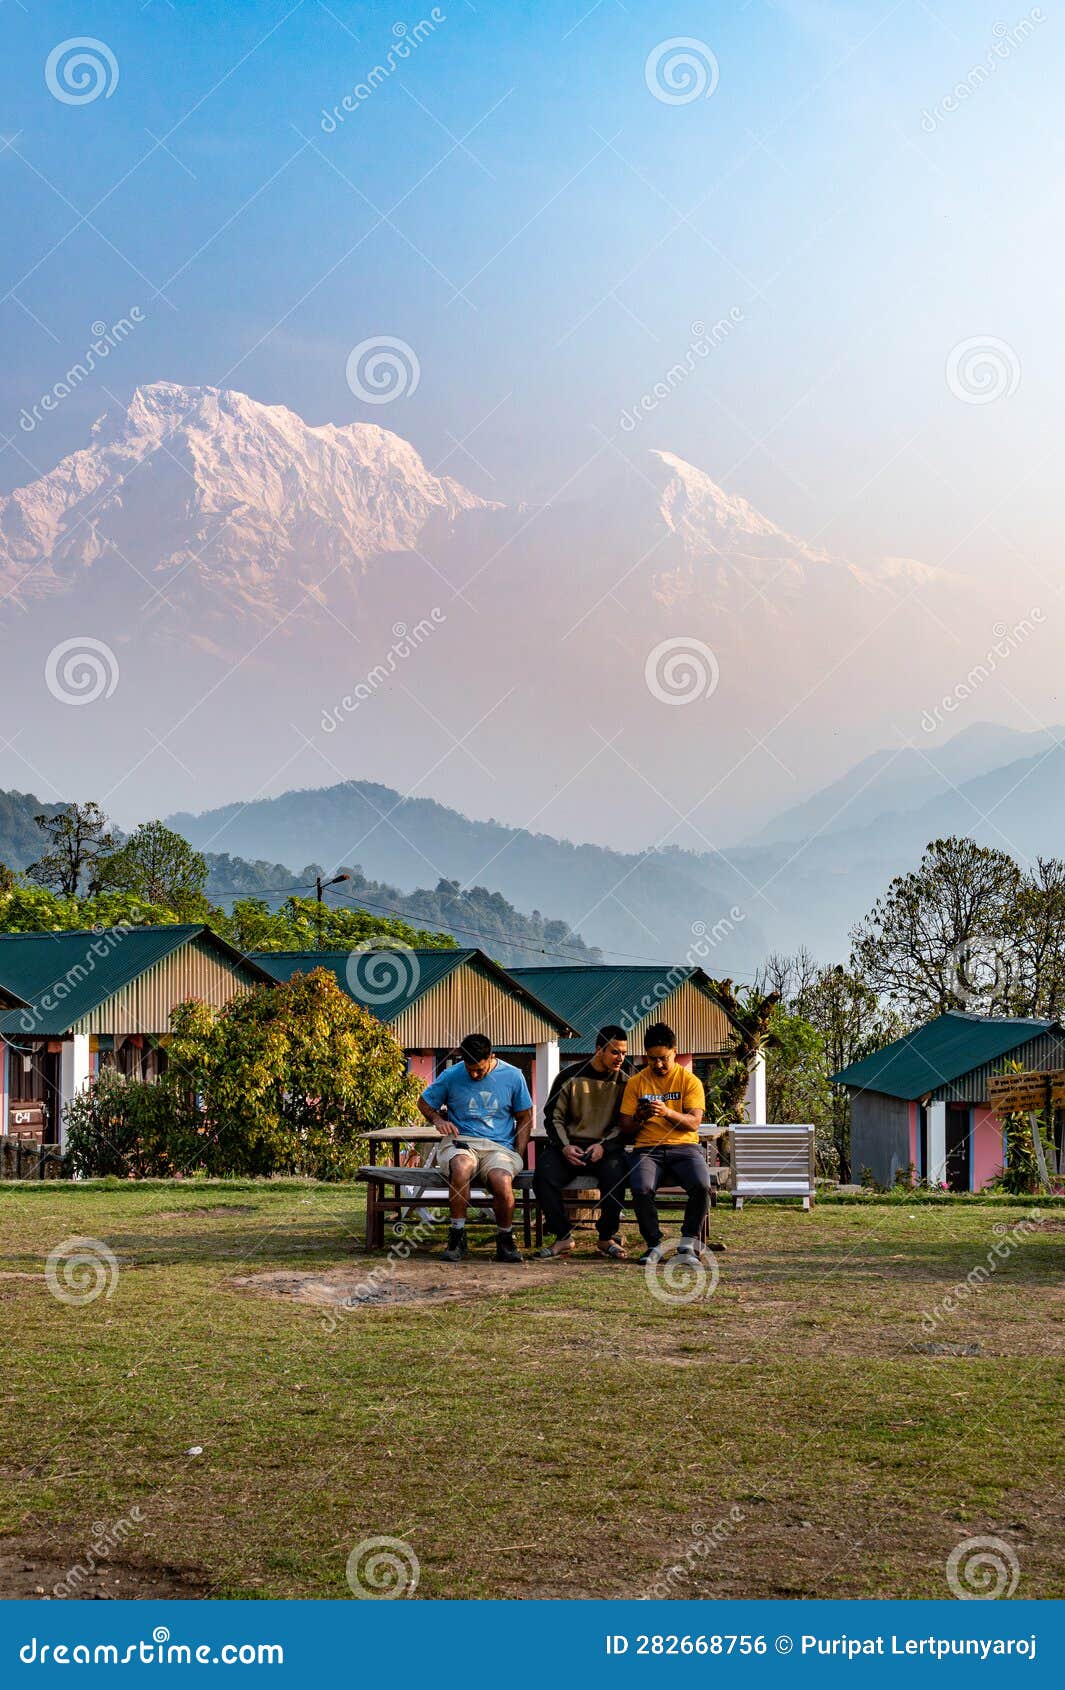 The Australian Camp, Pokhara, Nepal Editorial Photo - Image of buddhist ...